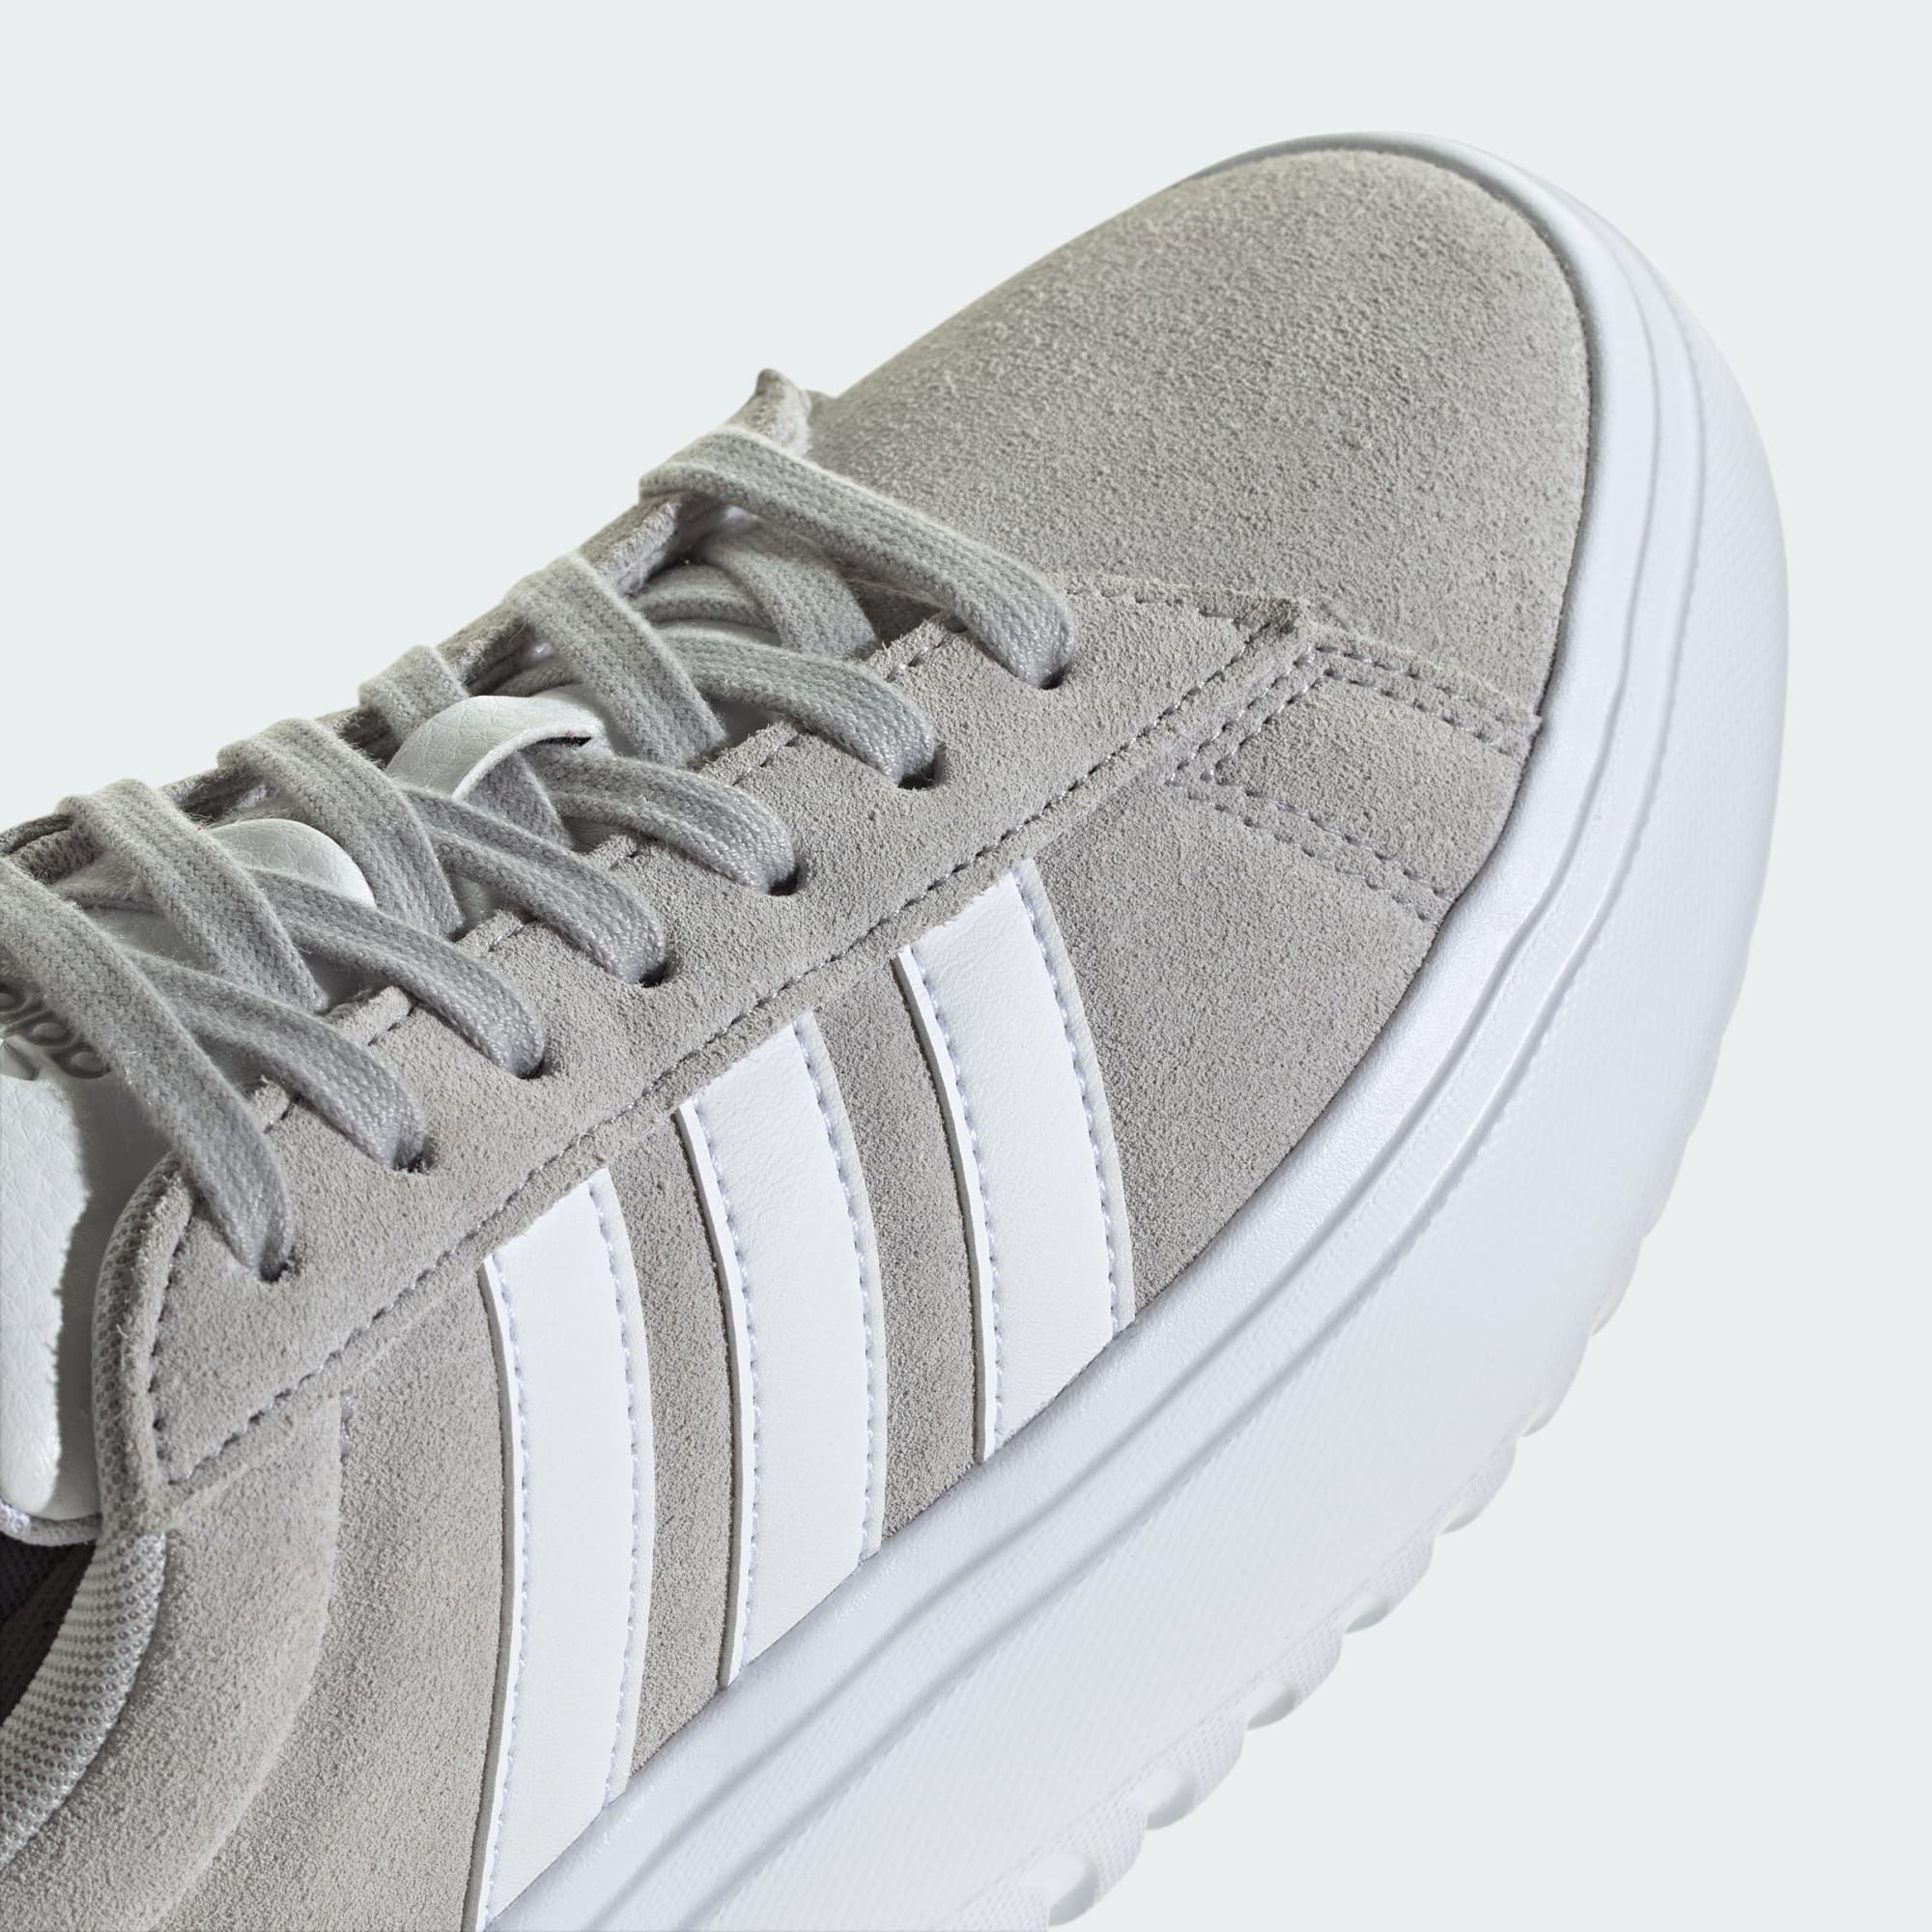  adidas Grand Court Platform - Grey 